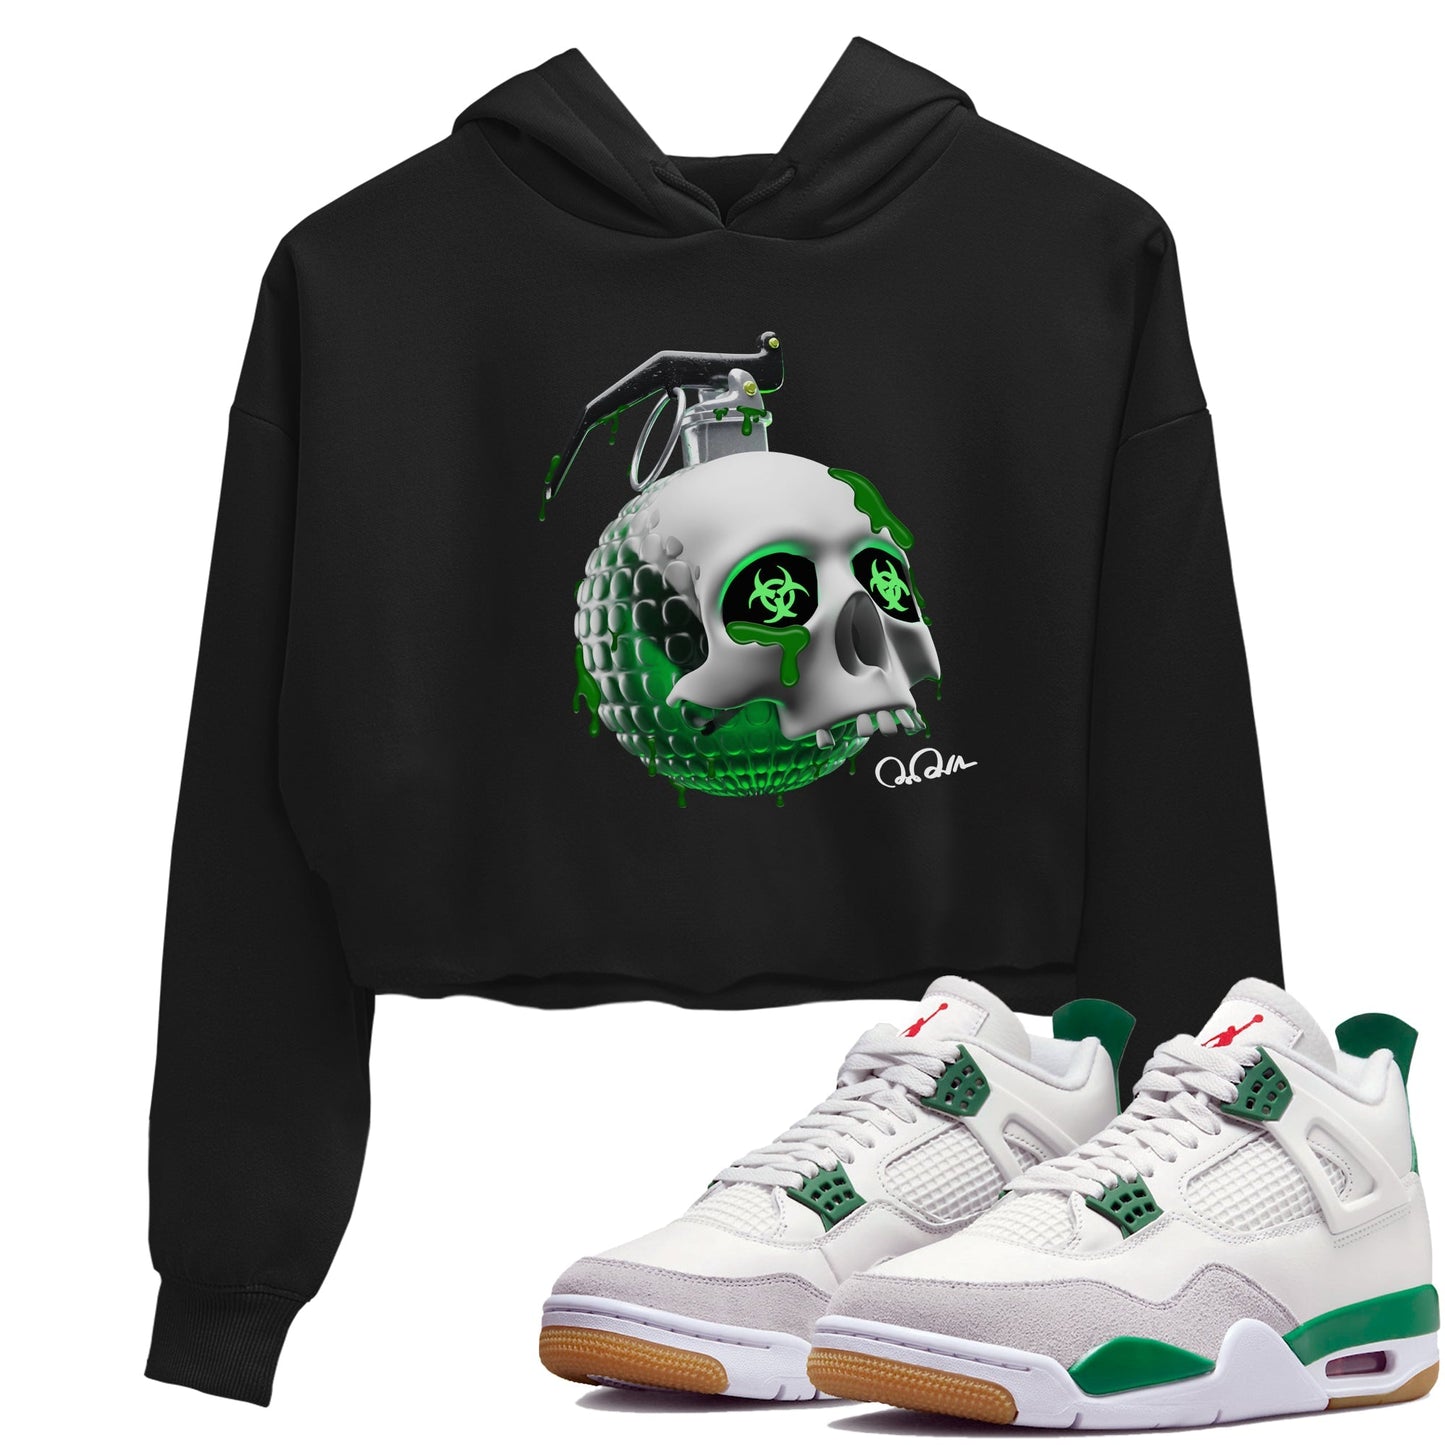 Air Jordan 4 Pine Green Sneaker Tees Drip Gear Zone Skull Bomb Sneaker Tees AJ4 Pine Green Shirt Women's Shirts Black 1